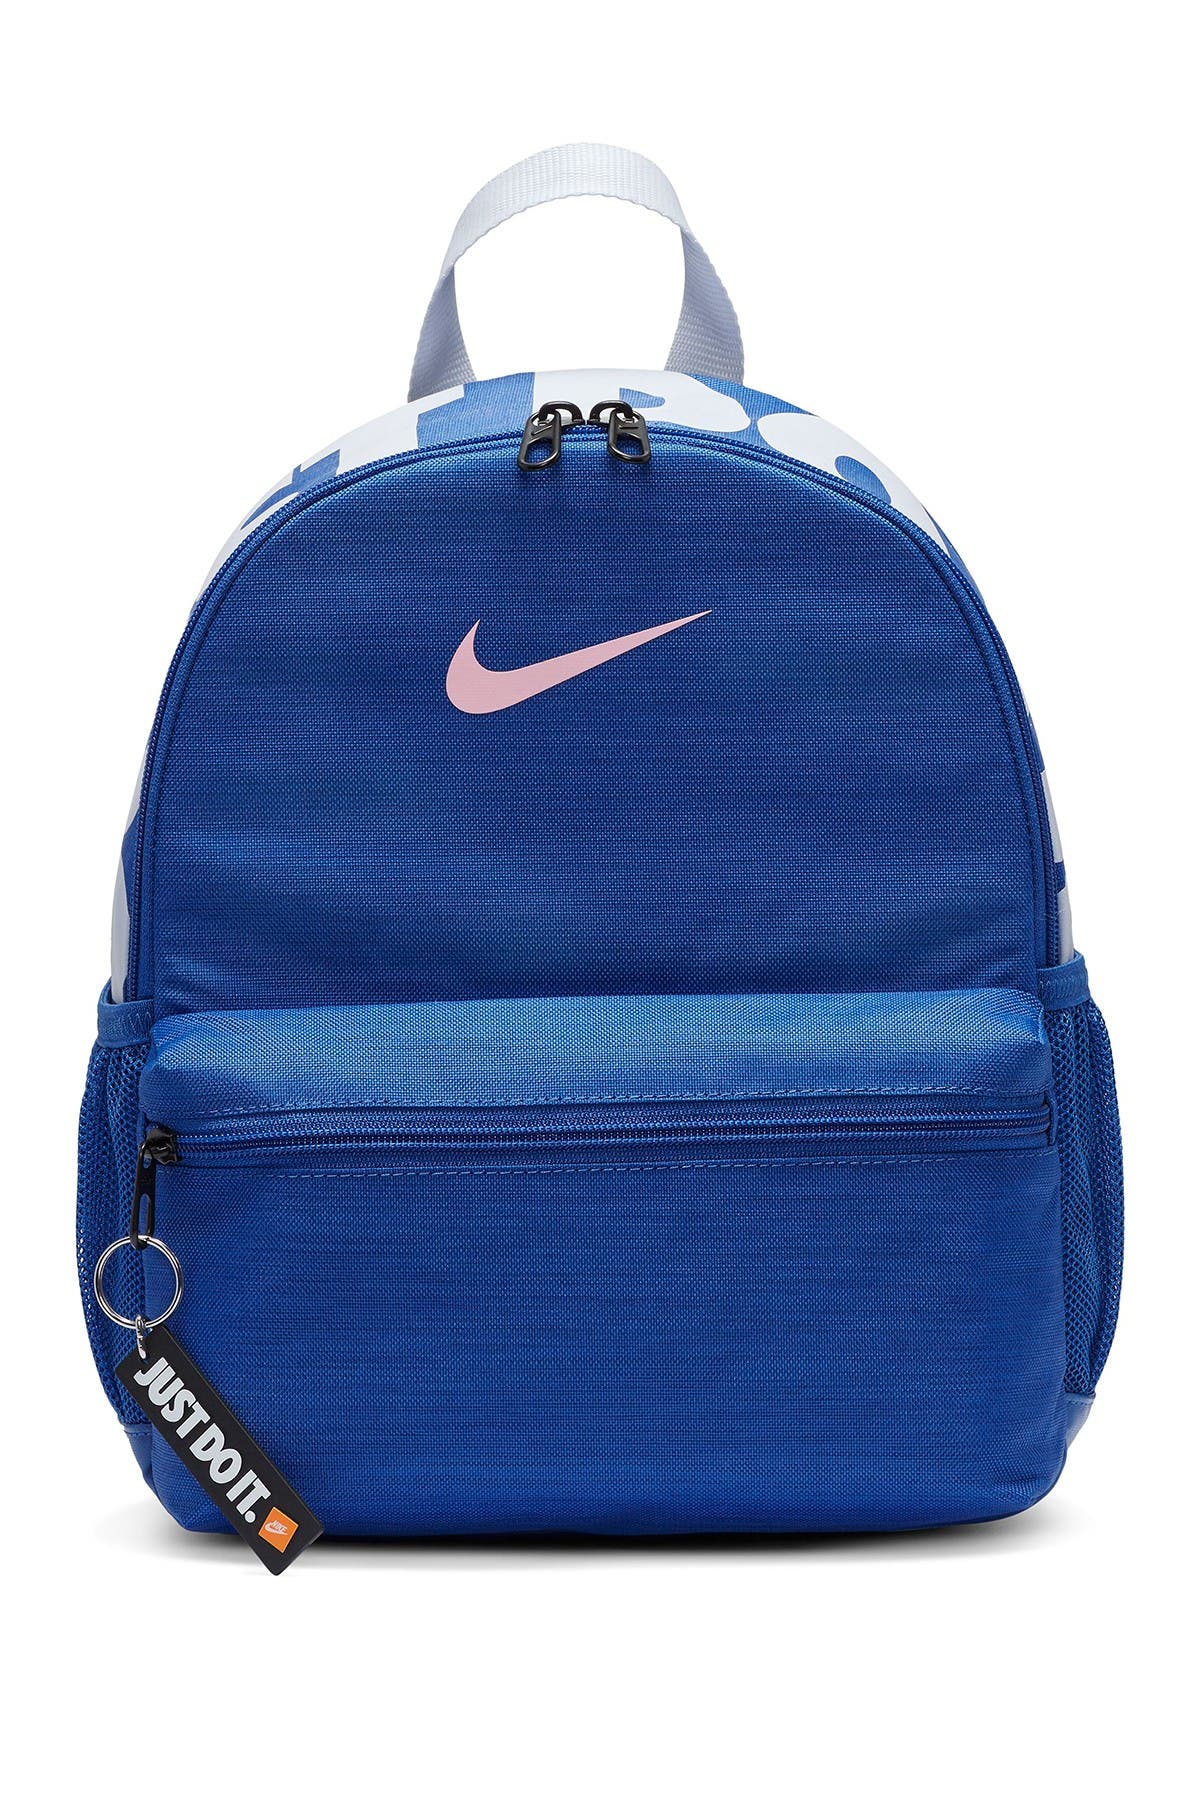 Nike | Brasilia Just Do It Mini Backpack | Nordstrom Rack